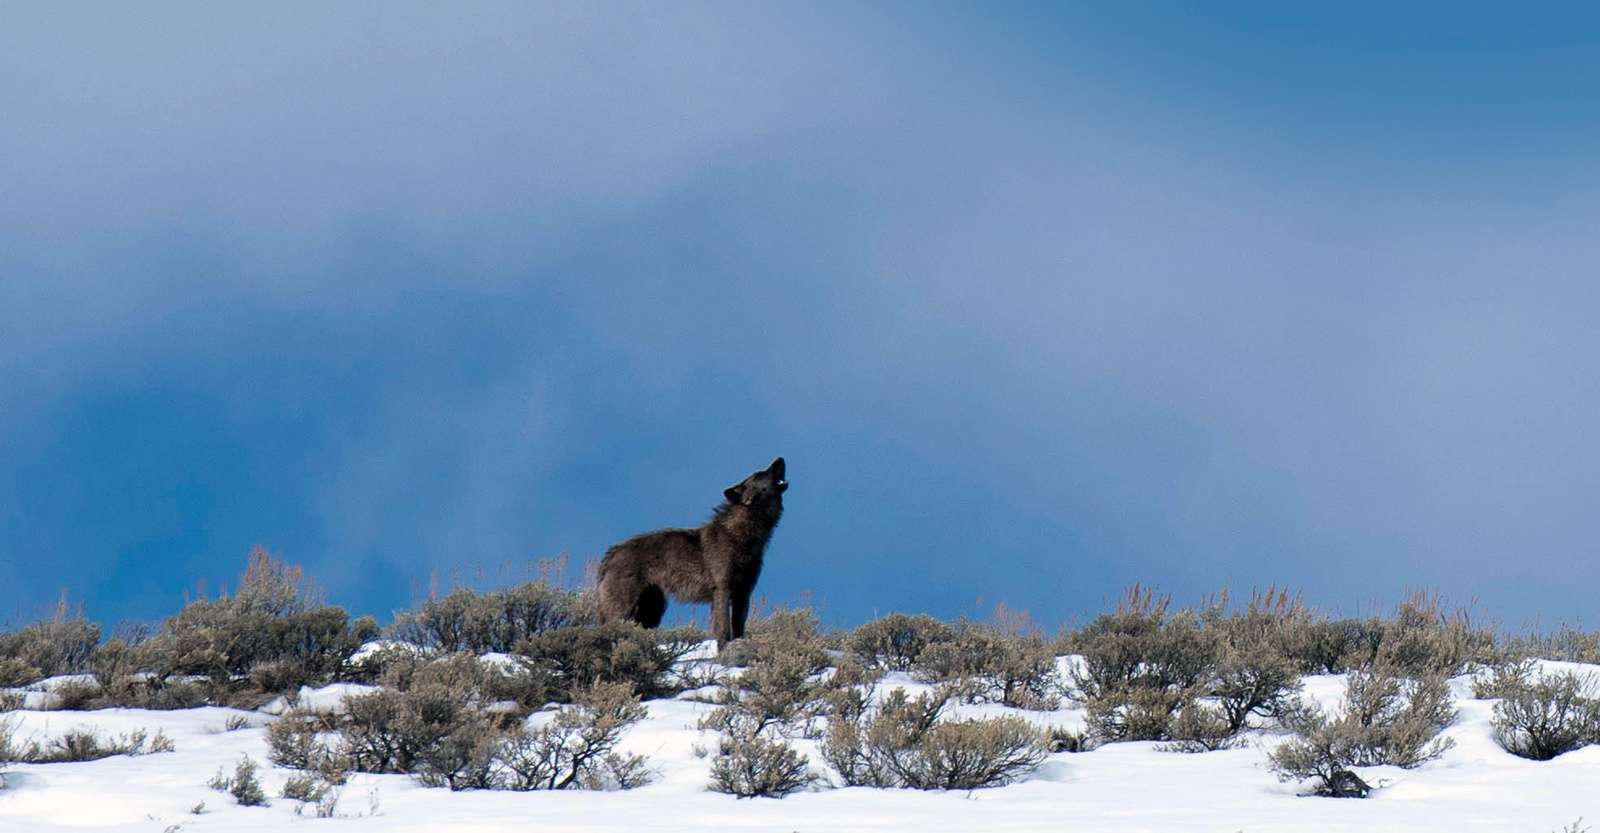 Black-coated gray wolf, Yellowstone National Park, Wyoming.